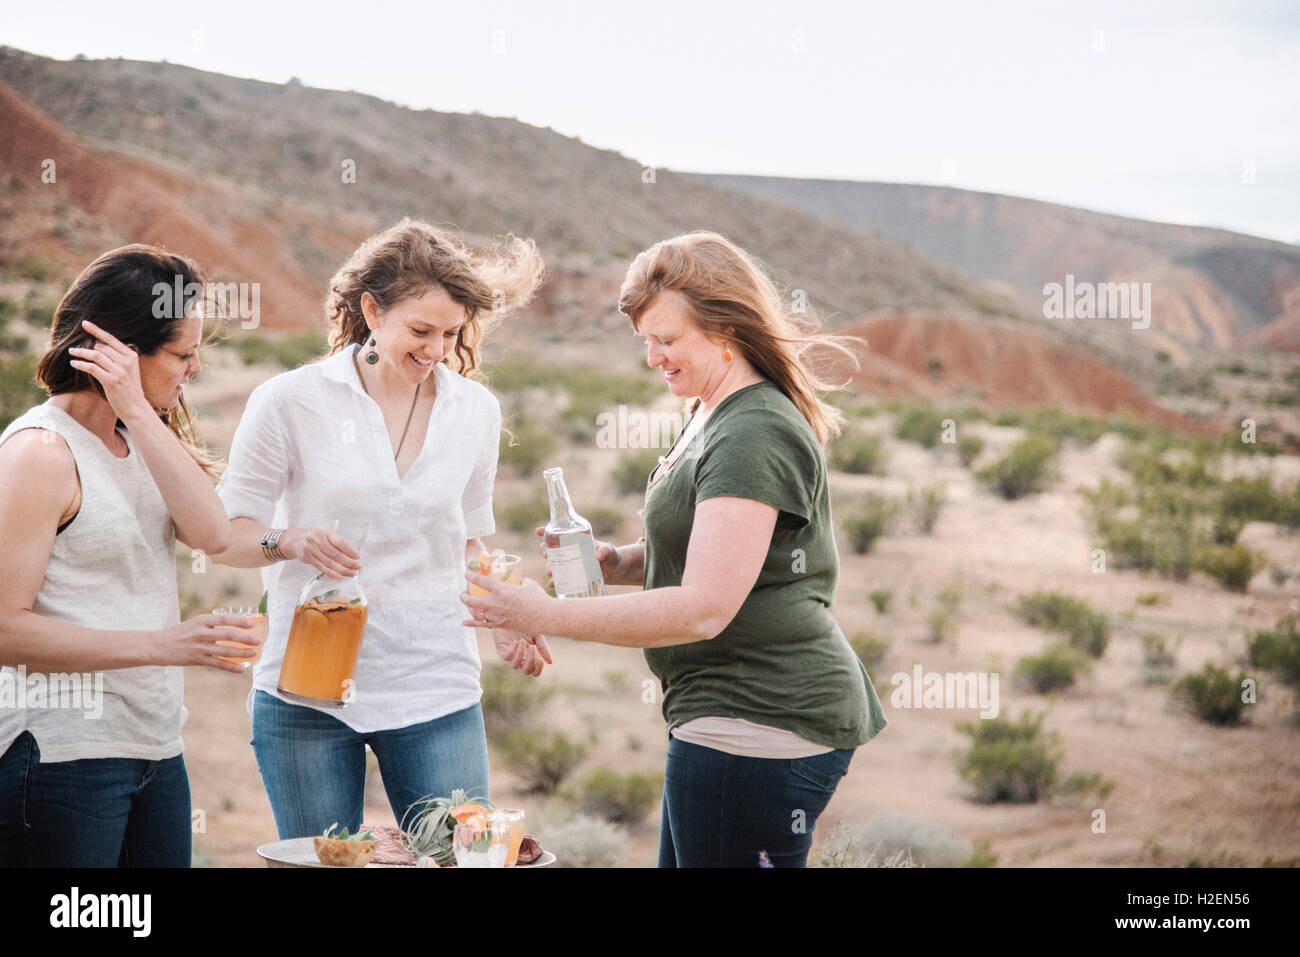 Three women standing in a desert landscape having a drink. Stock Photo